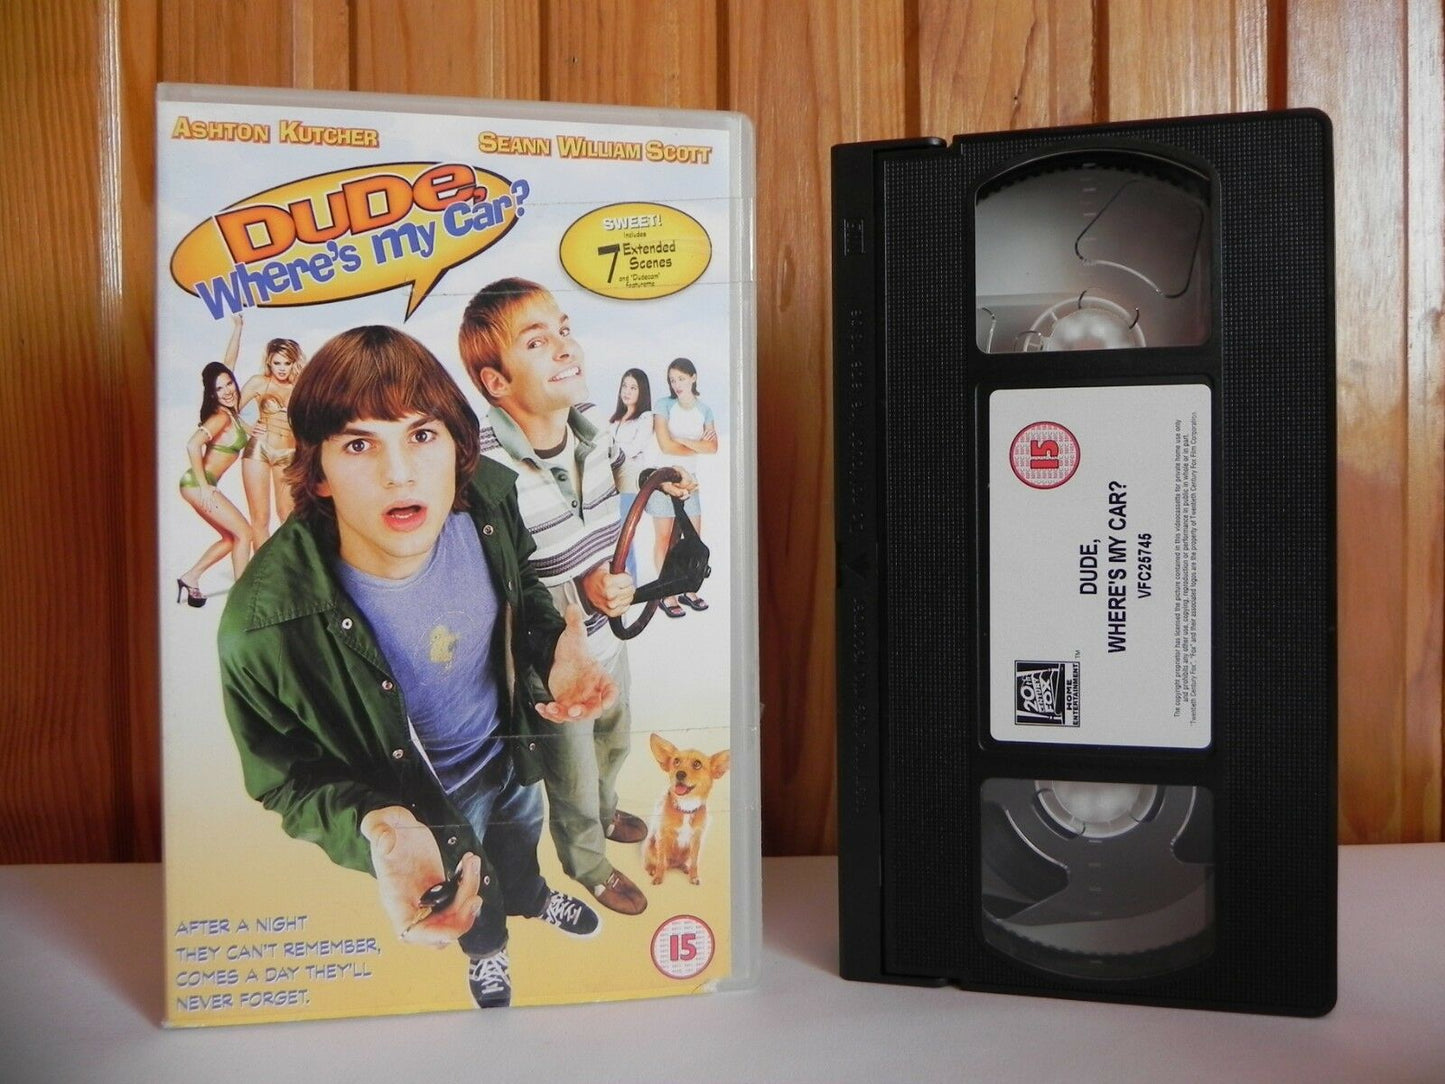 Dude, Where's My Car? - 20th Century Foc - Comedy - Ashton Kutcher - Pal VHS-